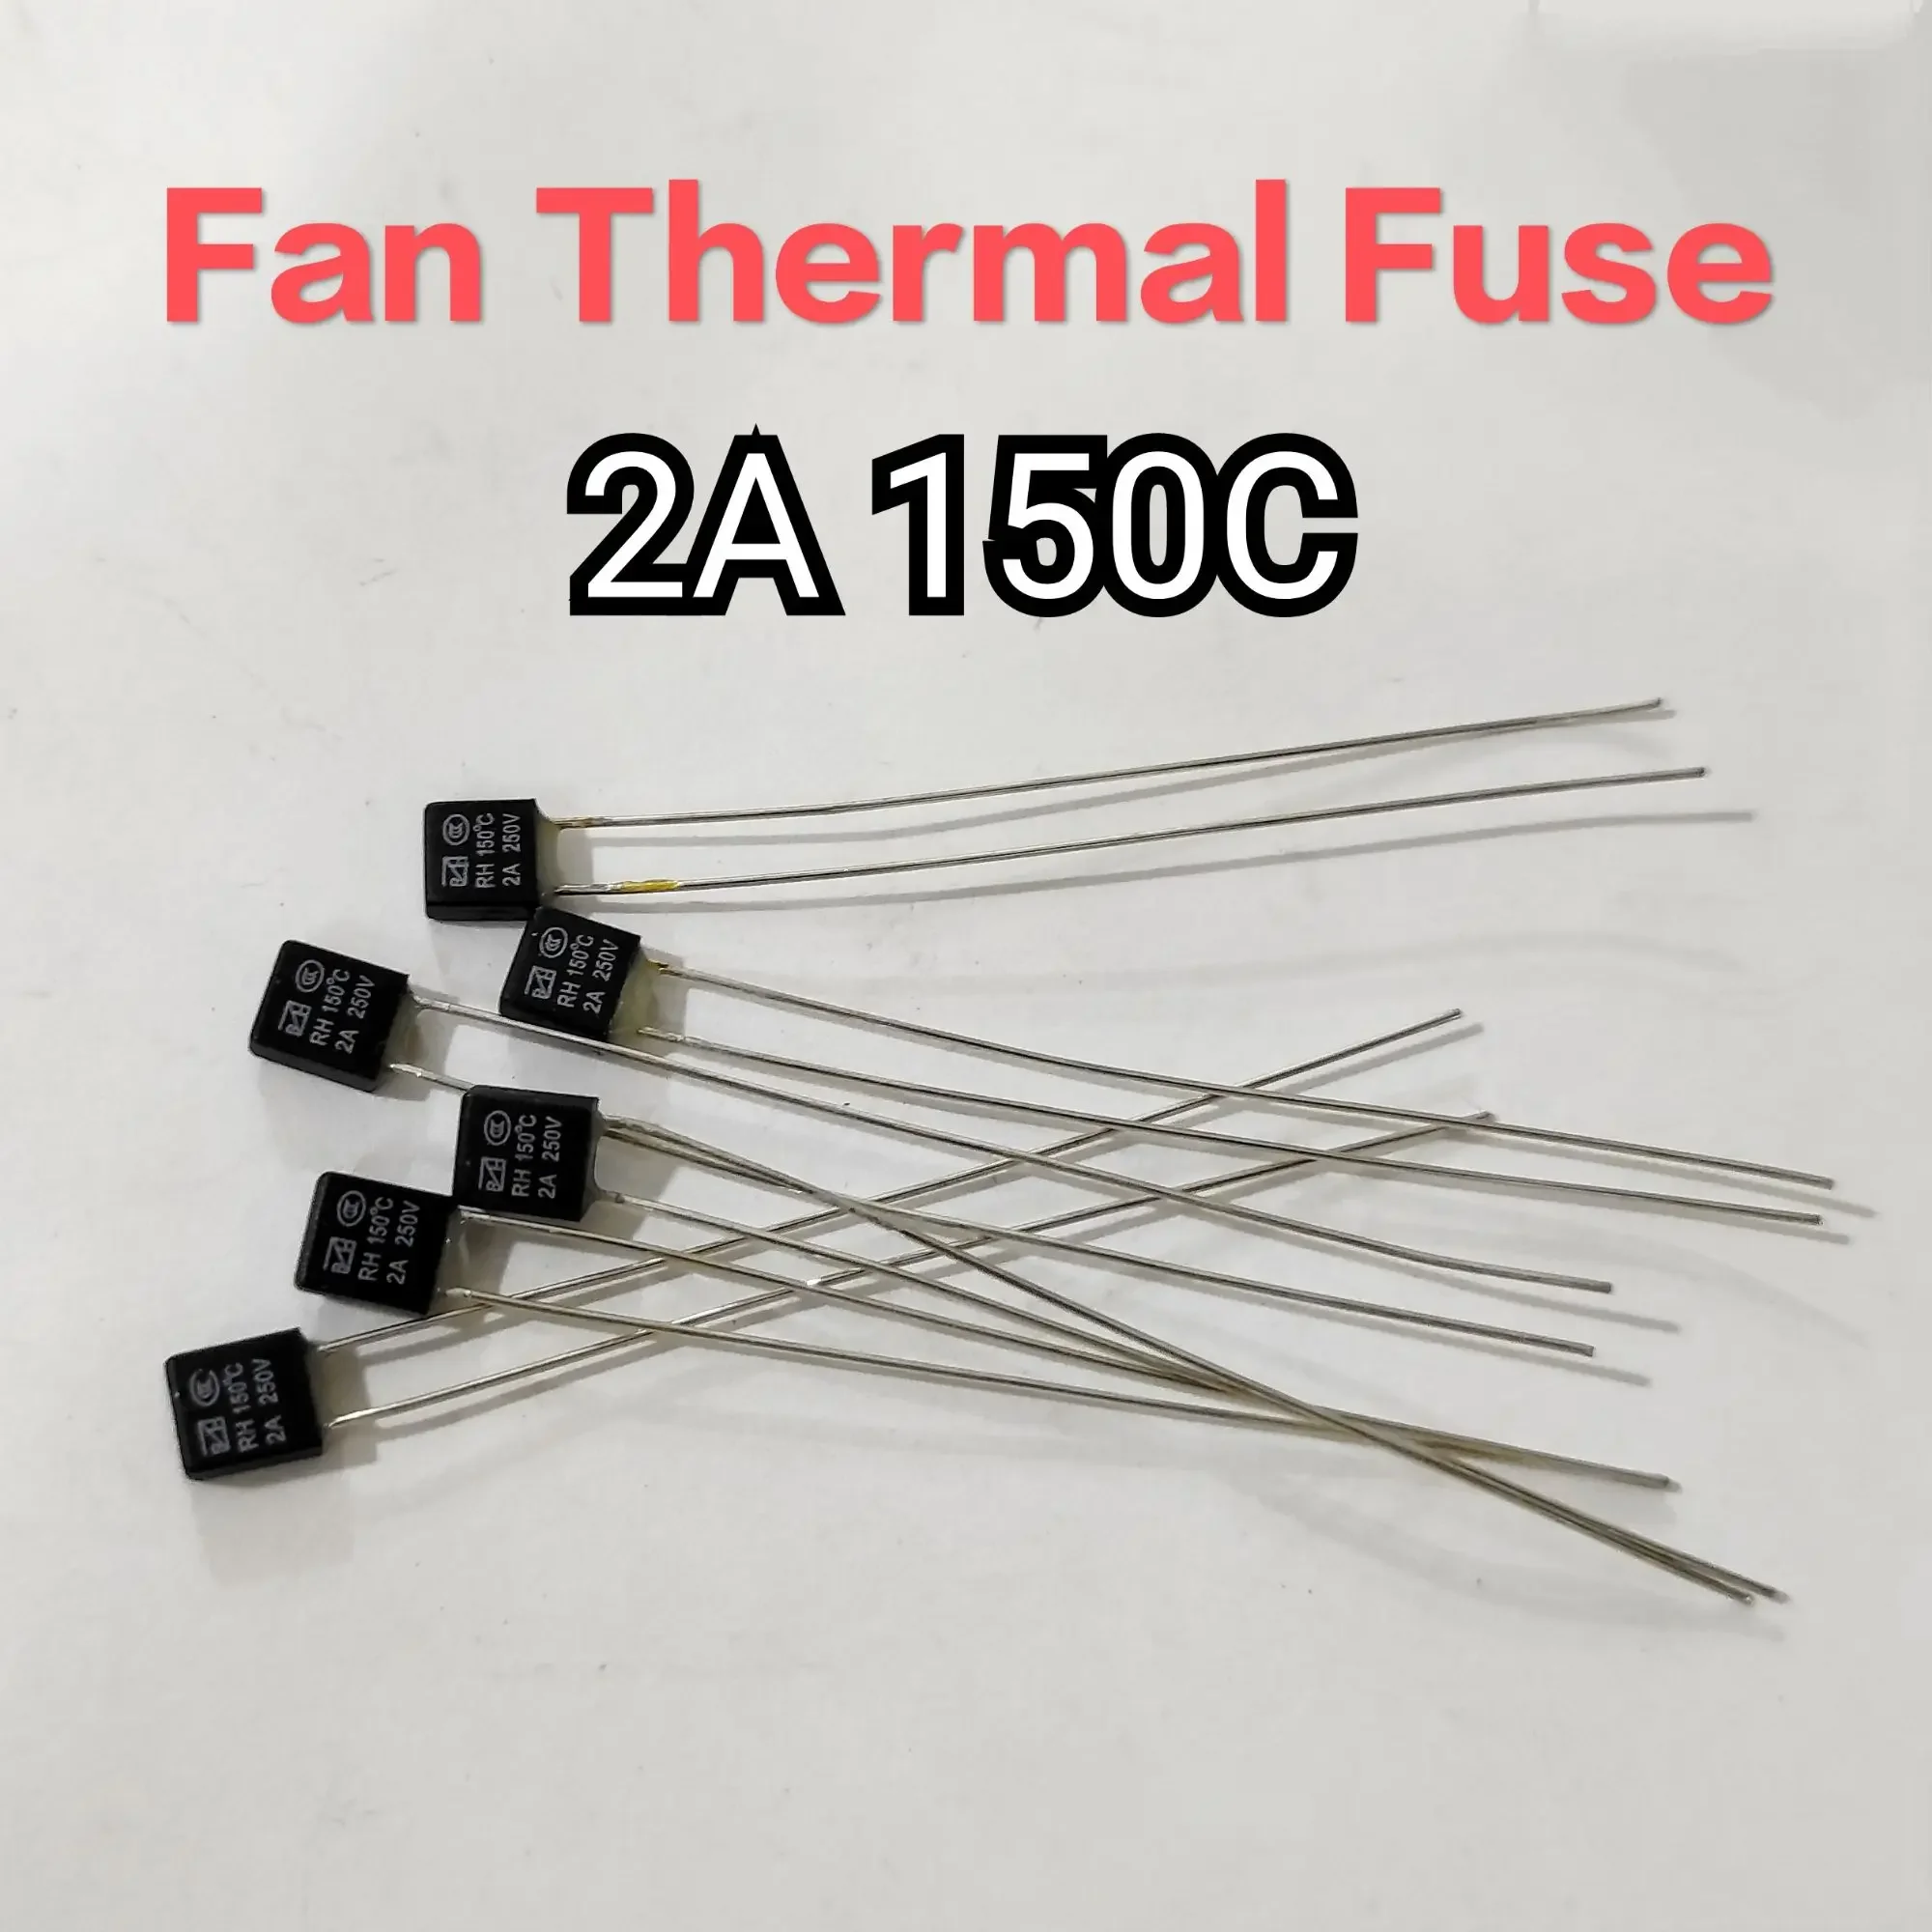 1 Biji 2A 150C 250V Fan Thermal Fuse fius kipas 2a 150c